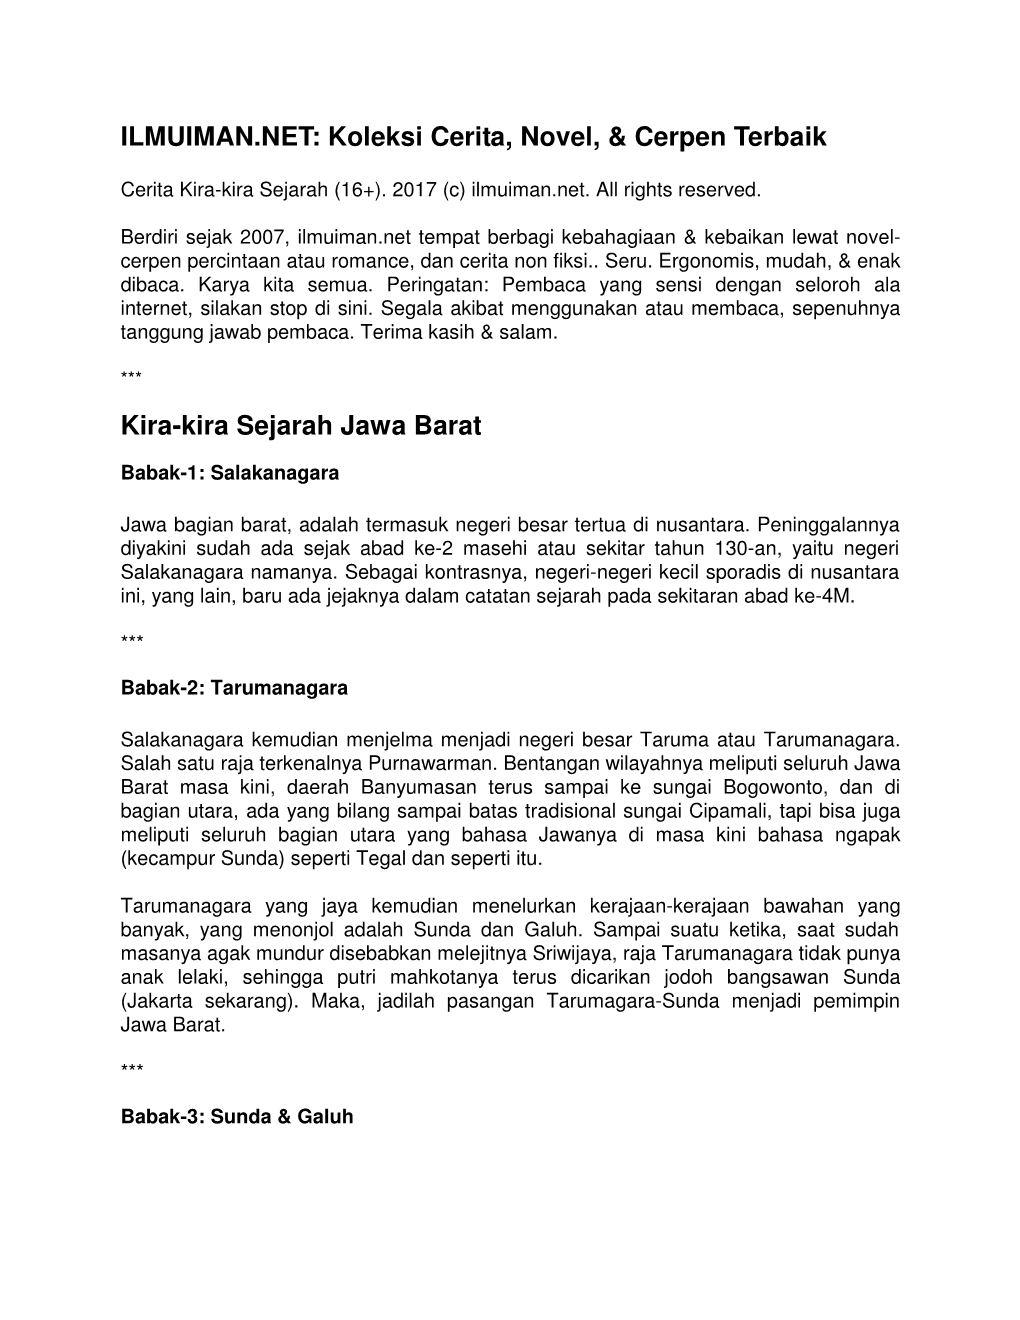 Koleksi Cerita, Novel, & Cerpen Terbaik Kira-Kira Sejarah Jawa Barat